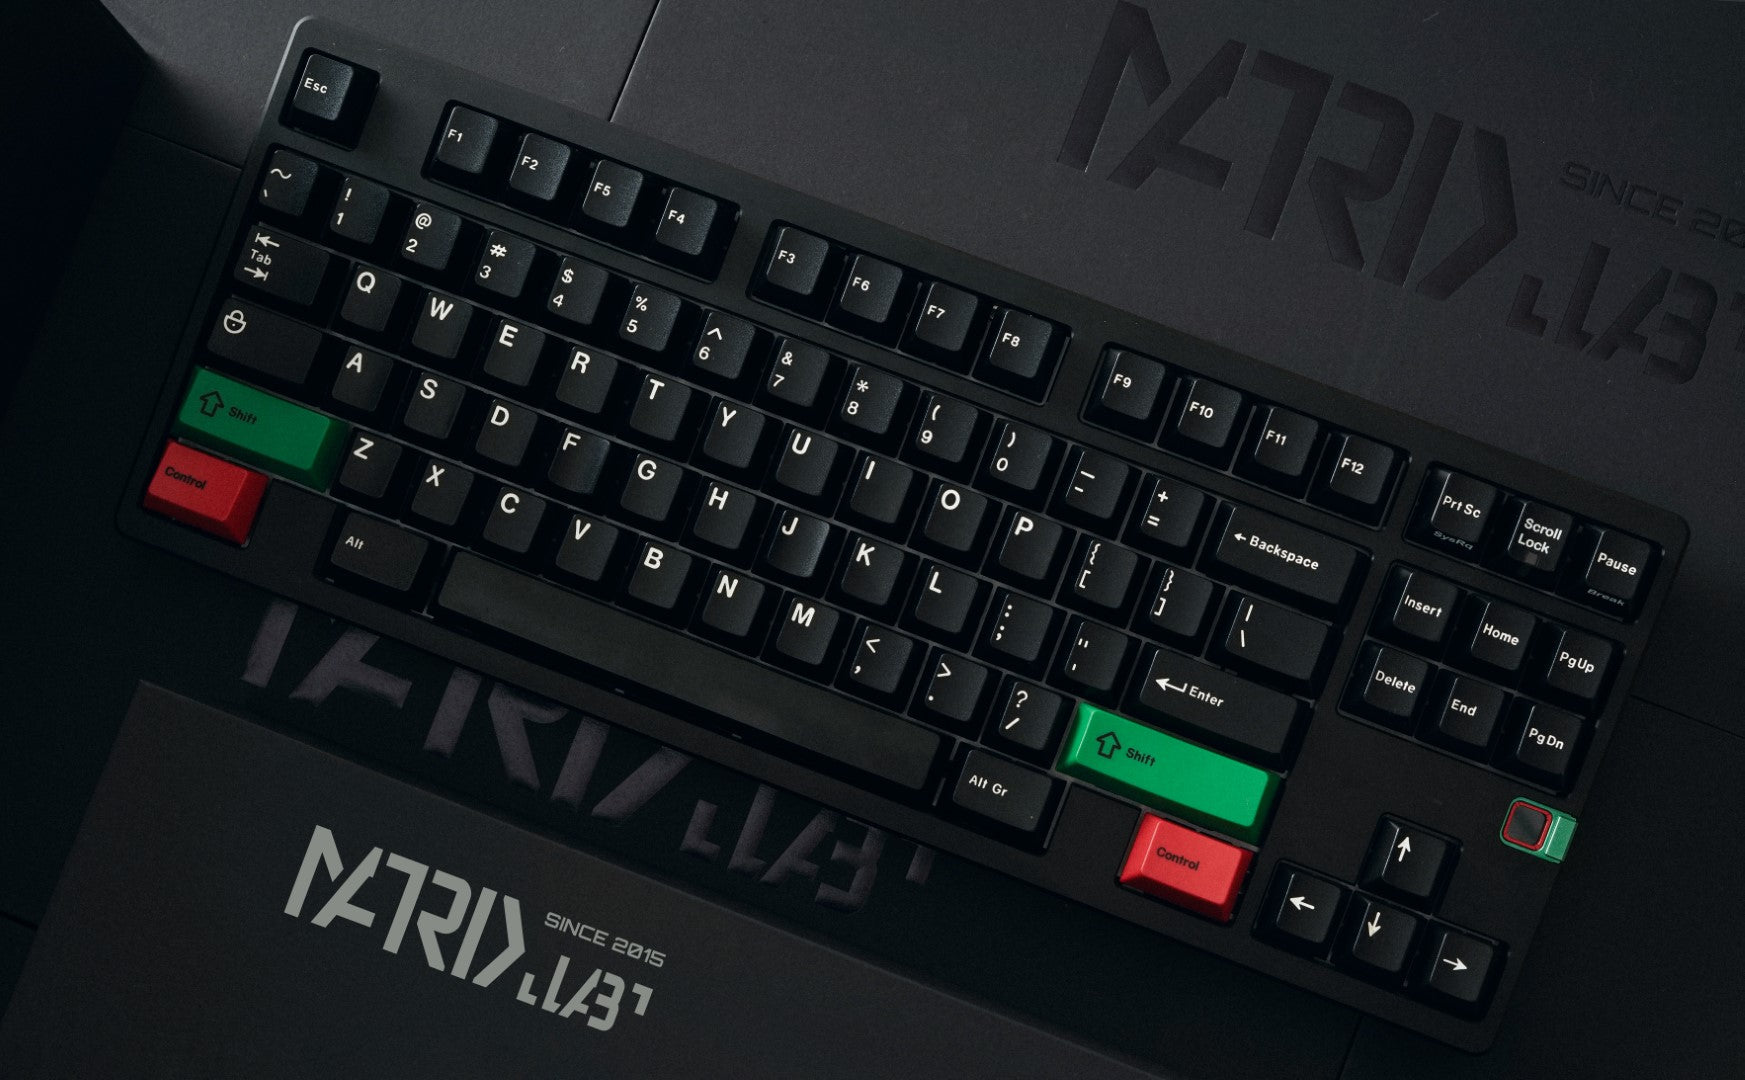 Matrix 8XV 3.0 "Eye" Keyboard - Solder Kit